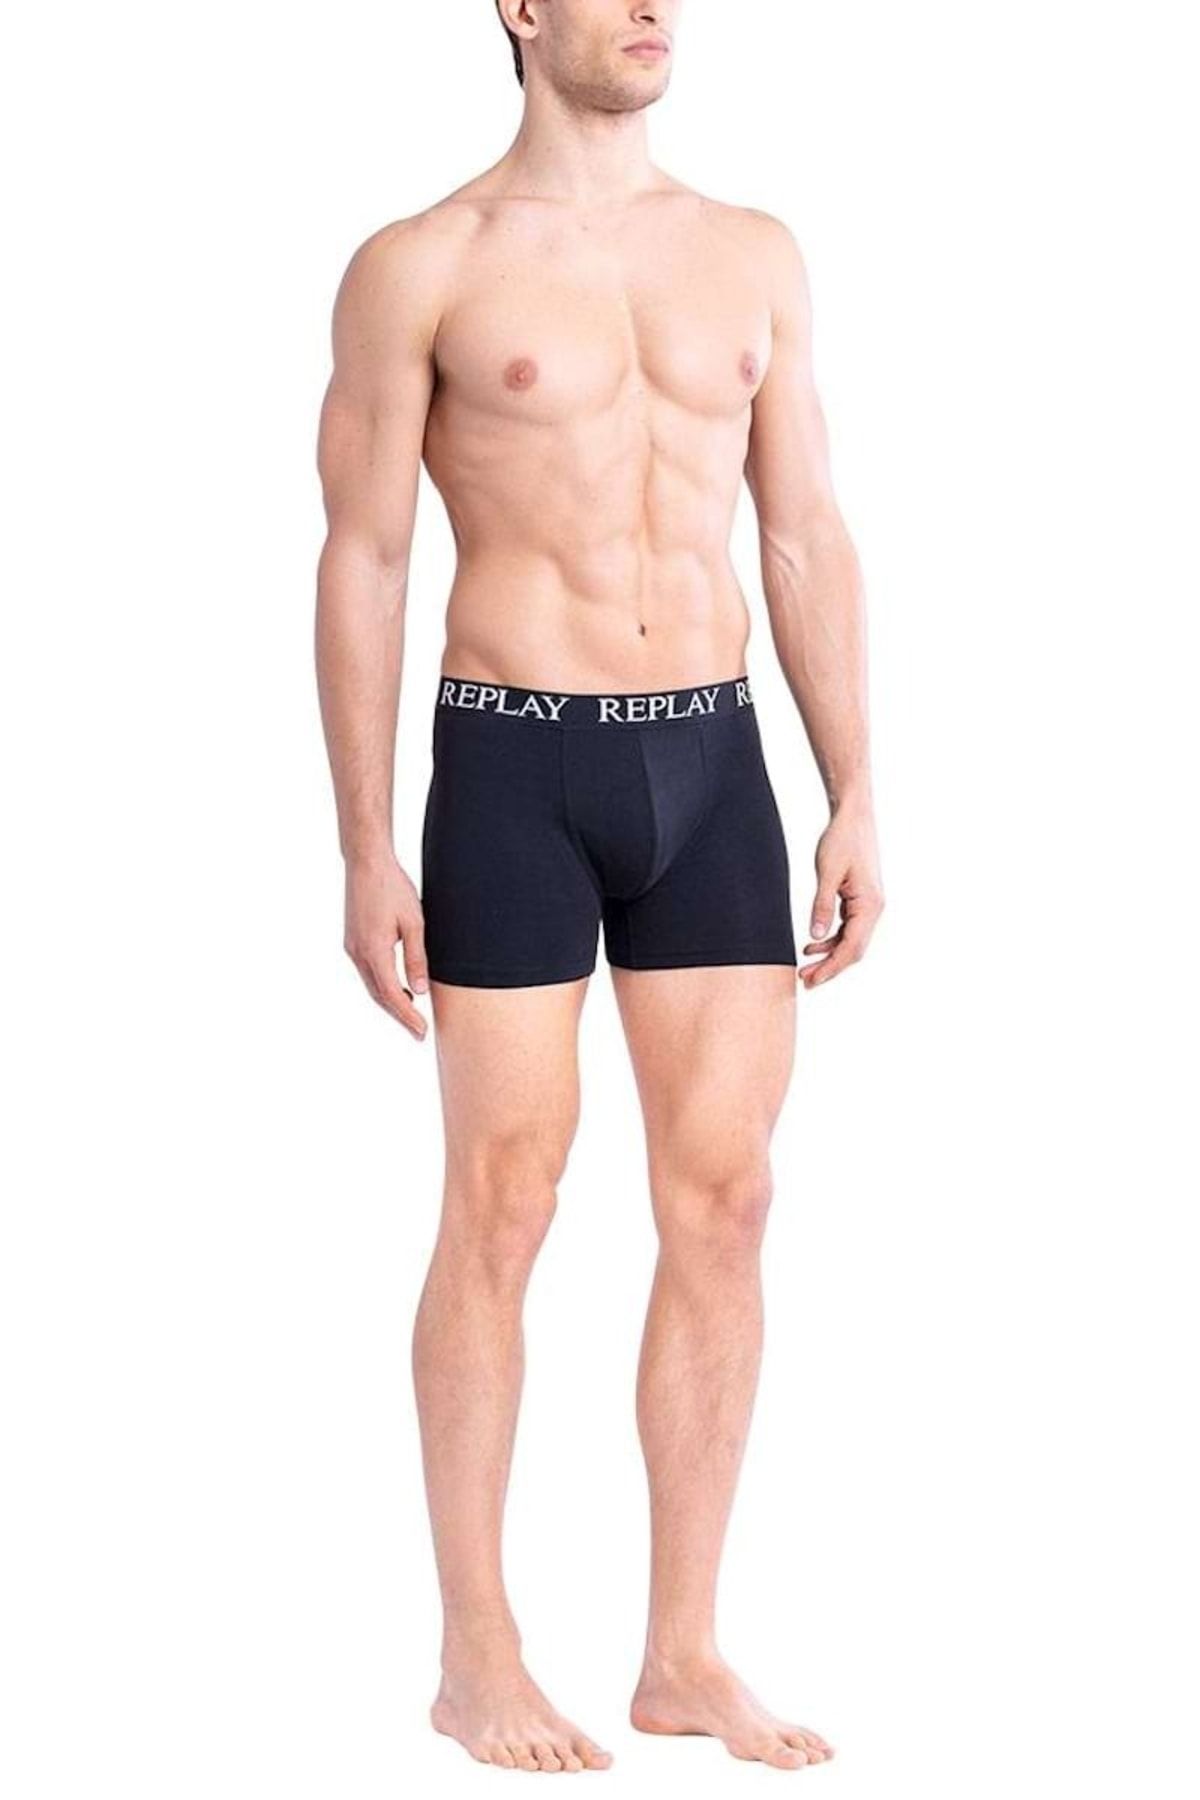 Dkny Boxer Shorts - Multicolor - Geometric pattern - Trendyol